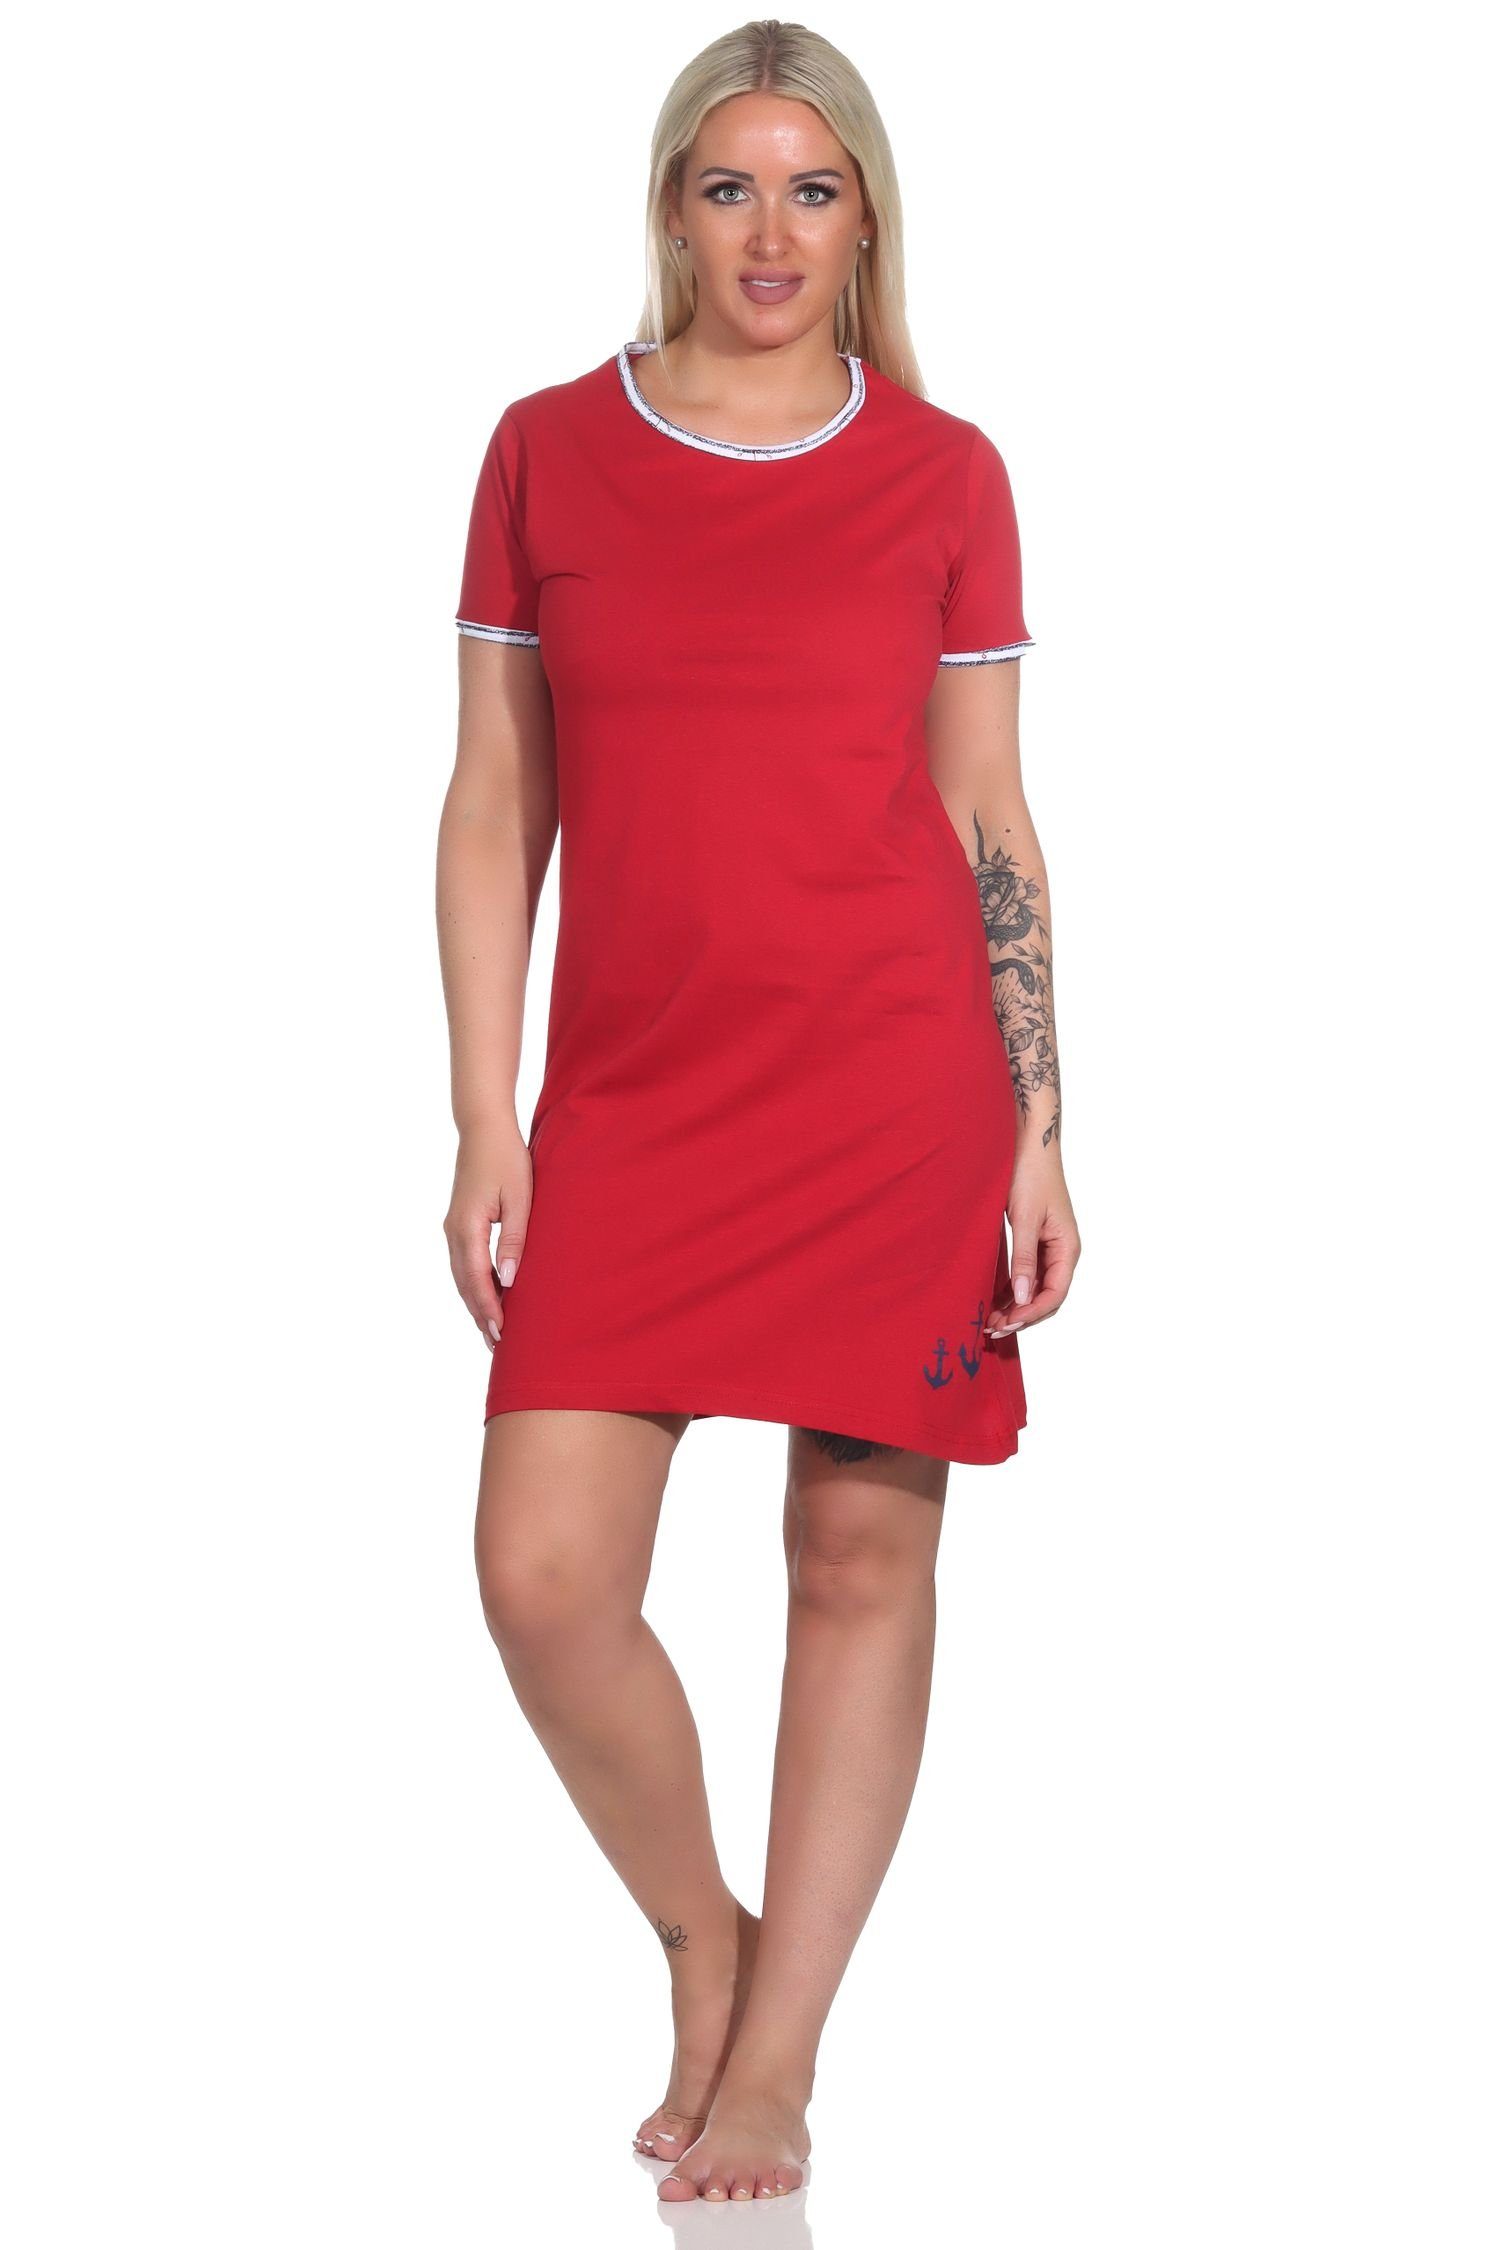 Normann Nachthemd Maritimes Damen Nachthemd, kurzärmliges Bigshirt mit Rundhals rot